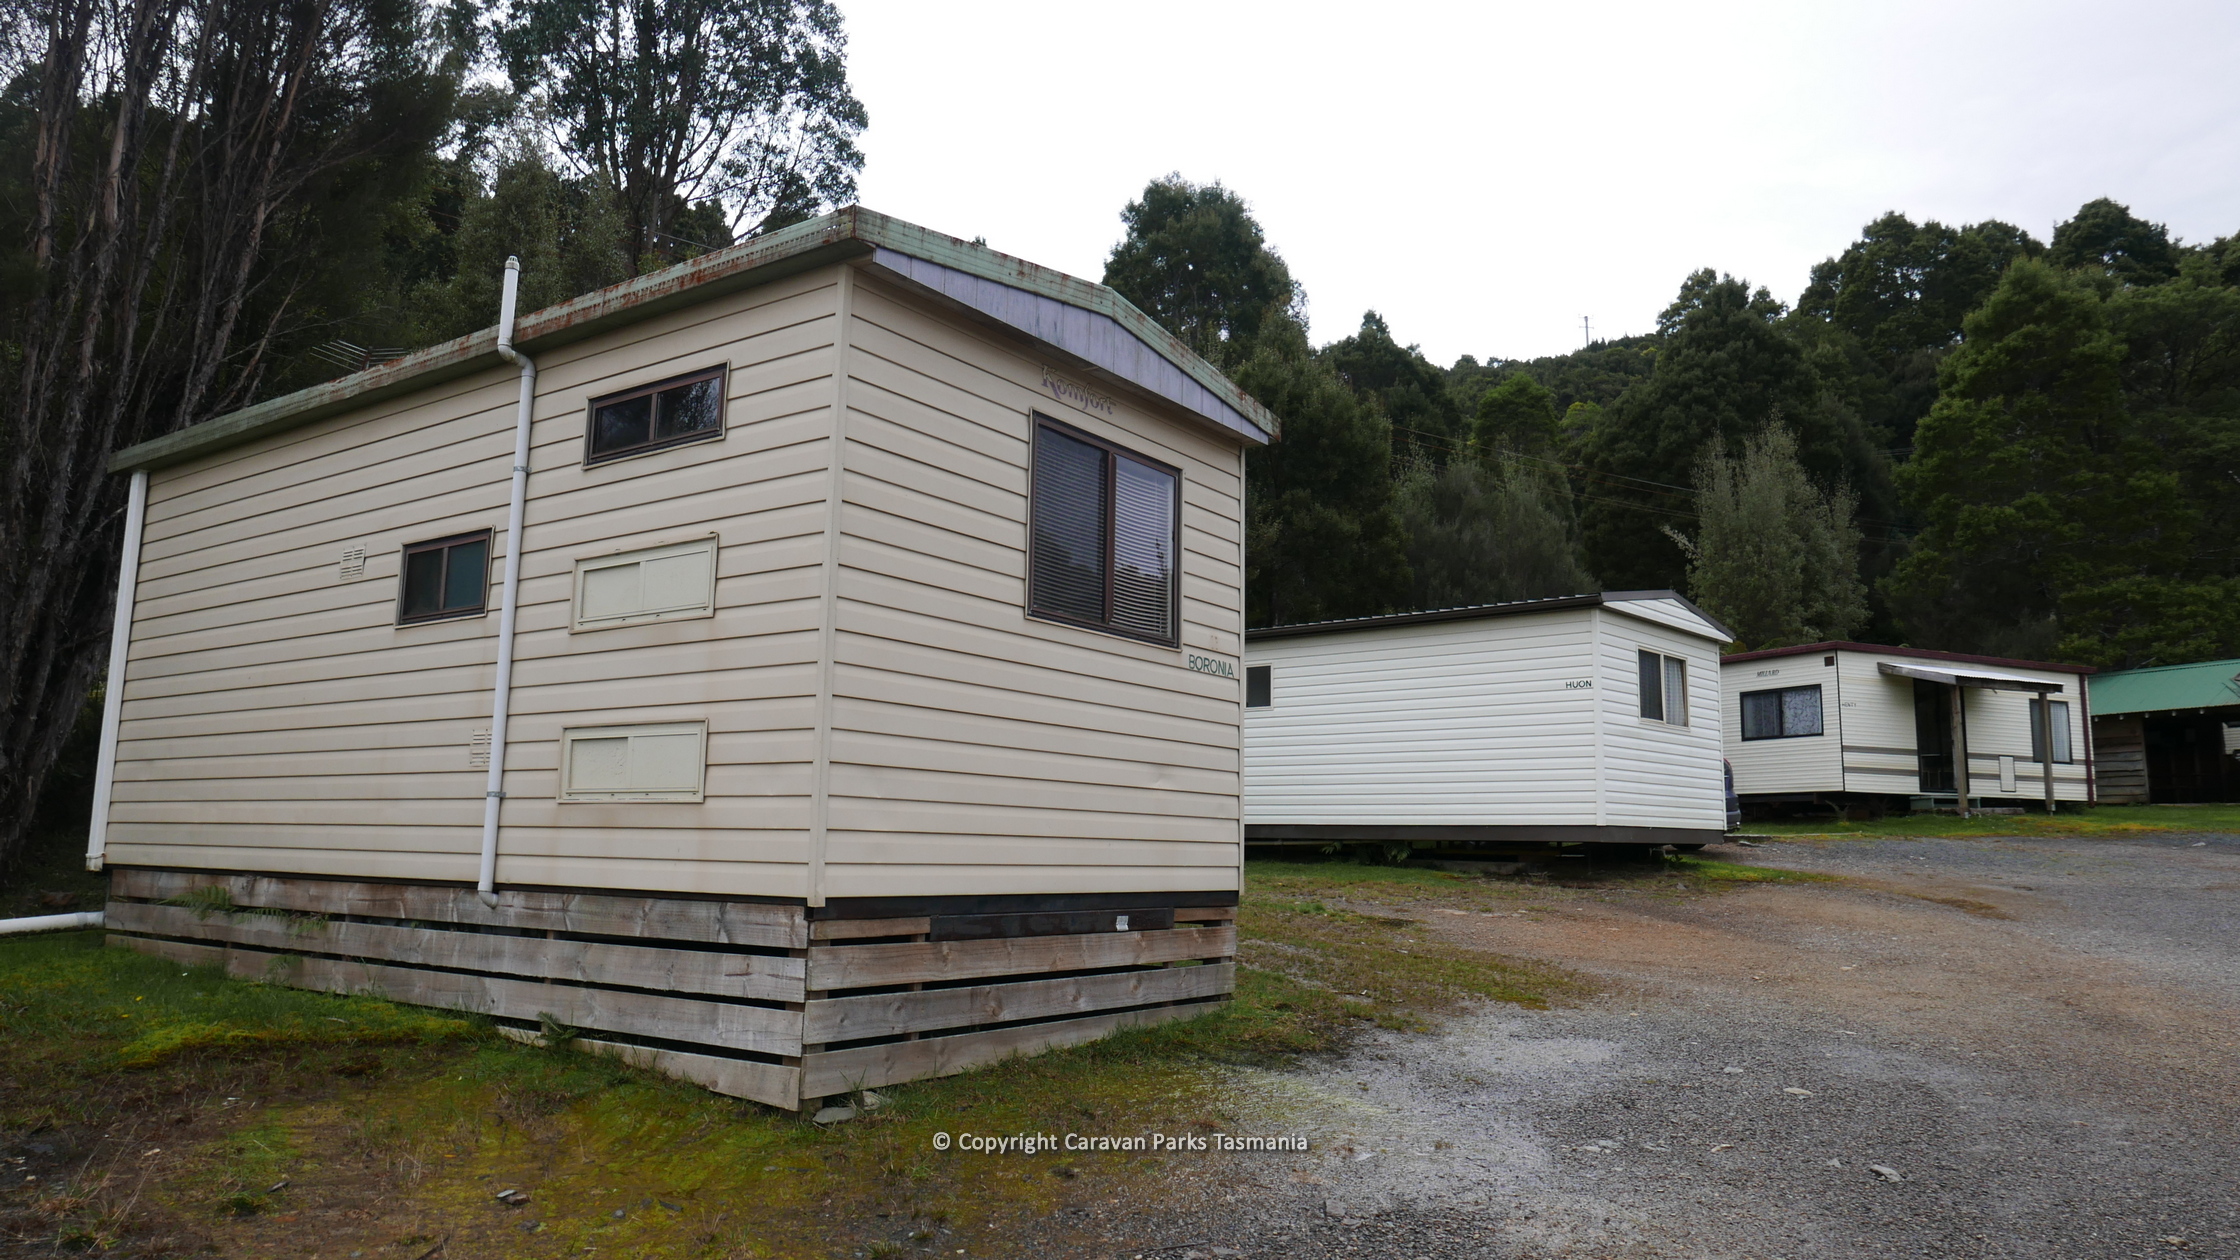 rosebery tourist cabin park tasmania